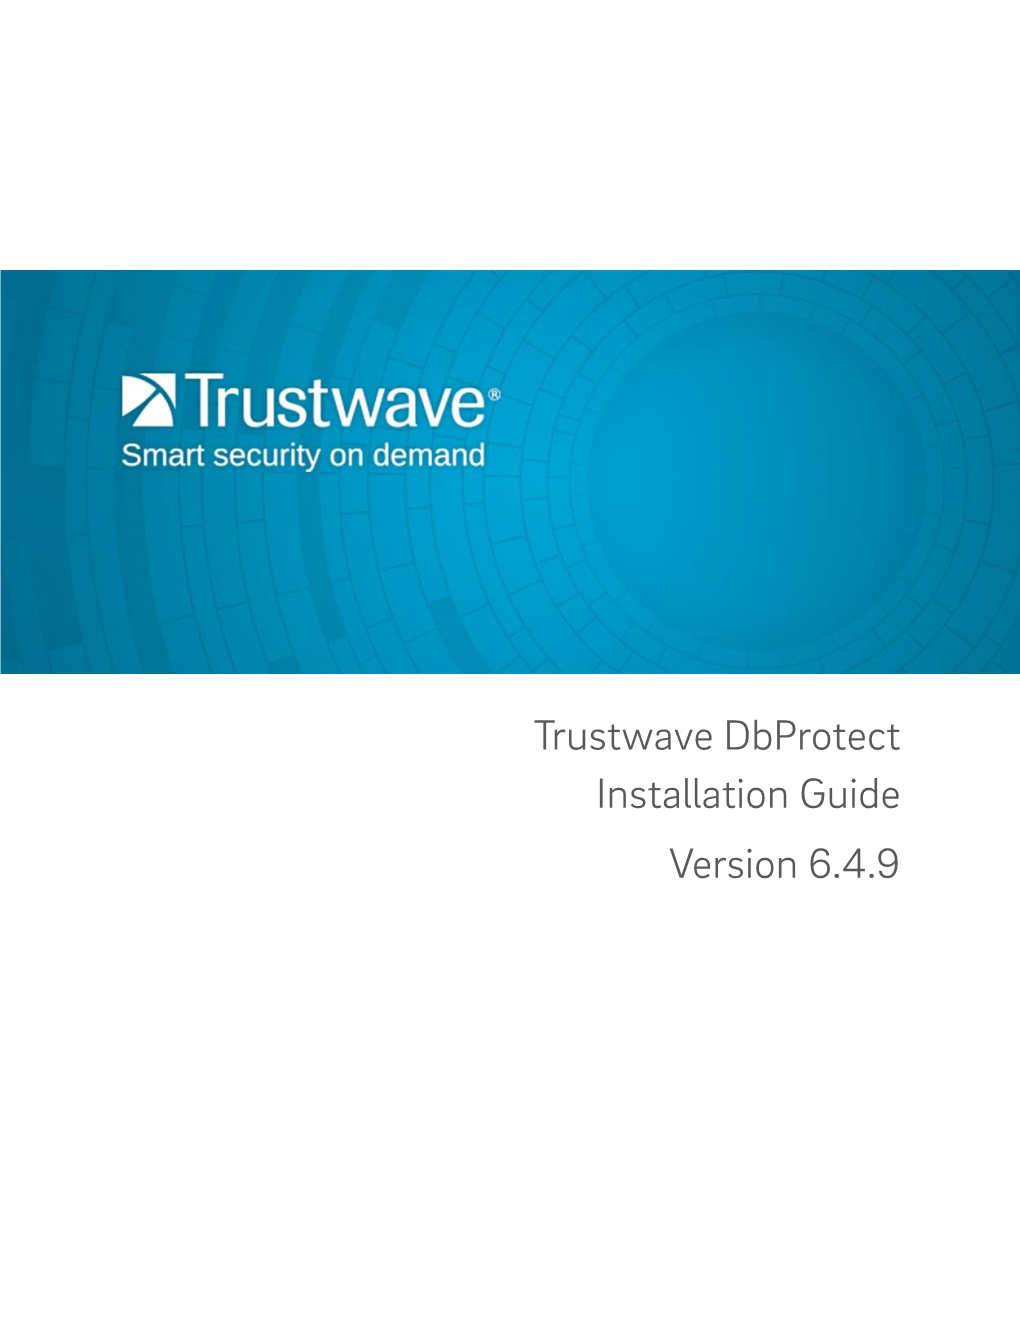 Trustwave Dbprotect Installation Guide Version 6.4.9 Trustwave Dbprotect 6.4.9 Installation Guide - January 6, 2017